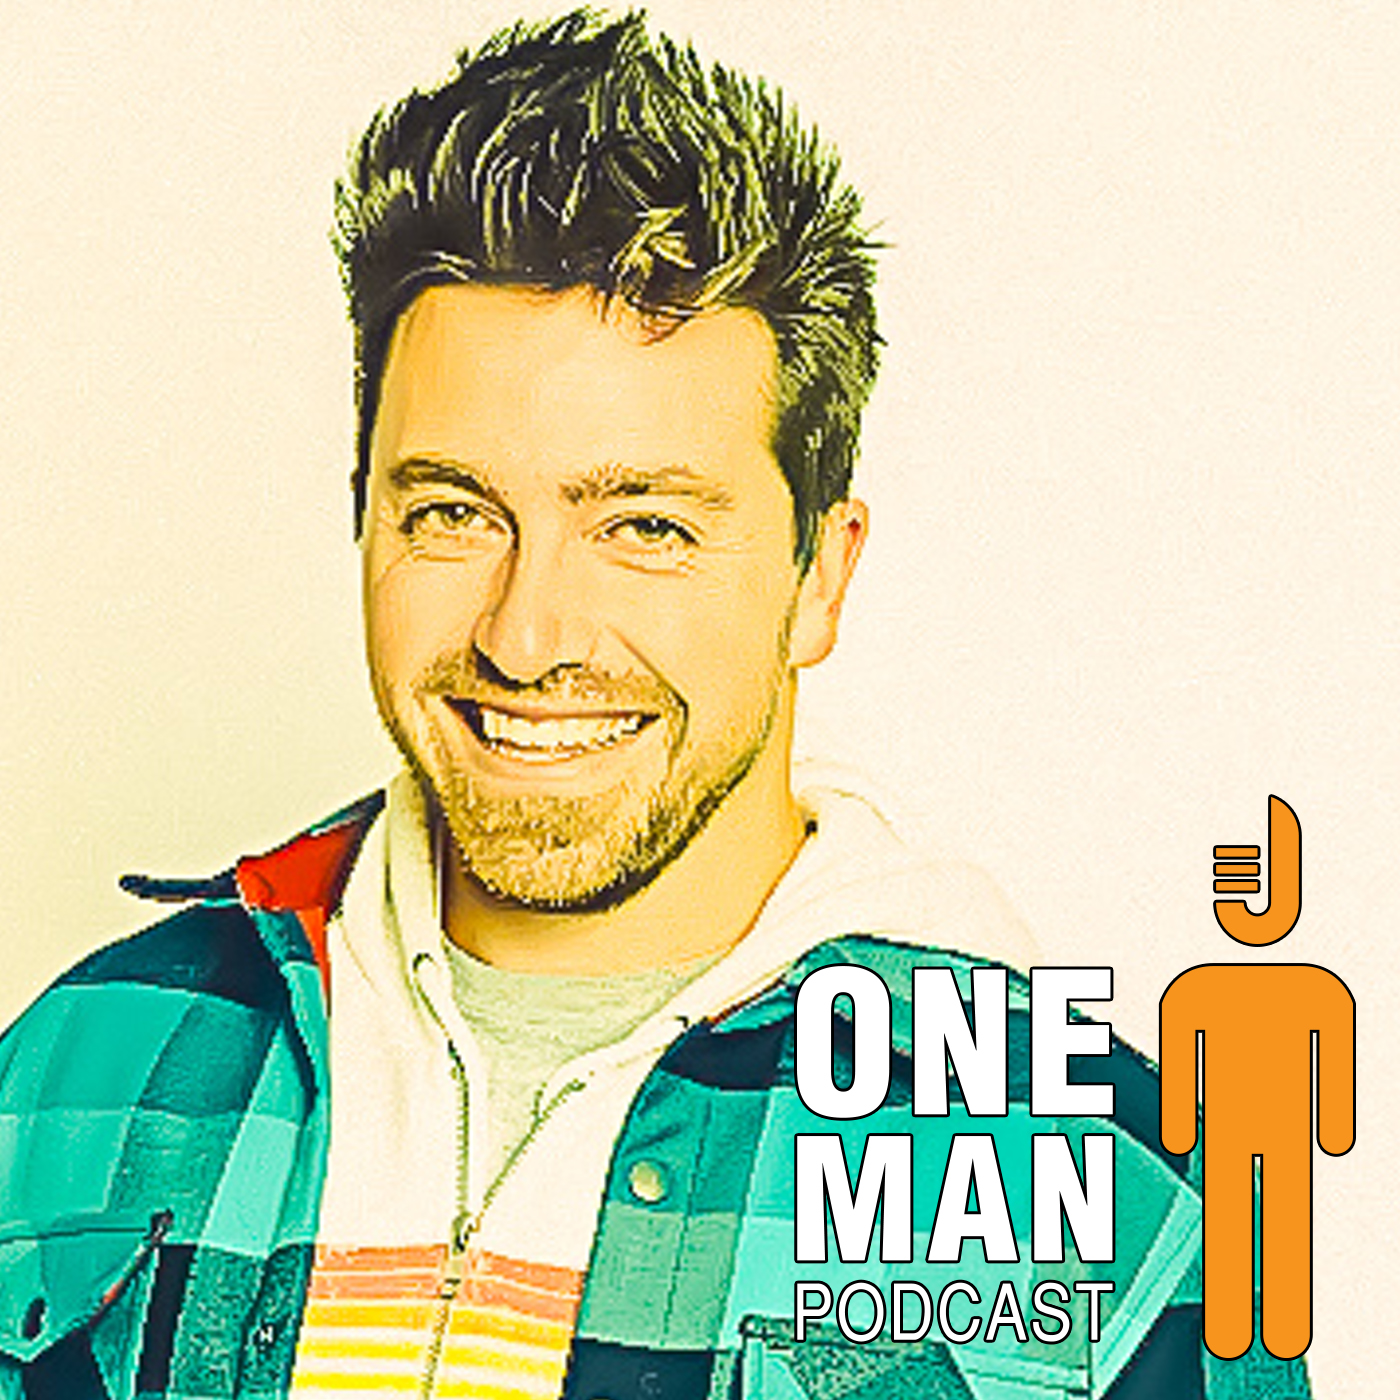 One Man Podcast - Geoff MacKay